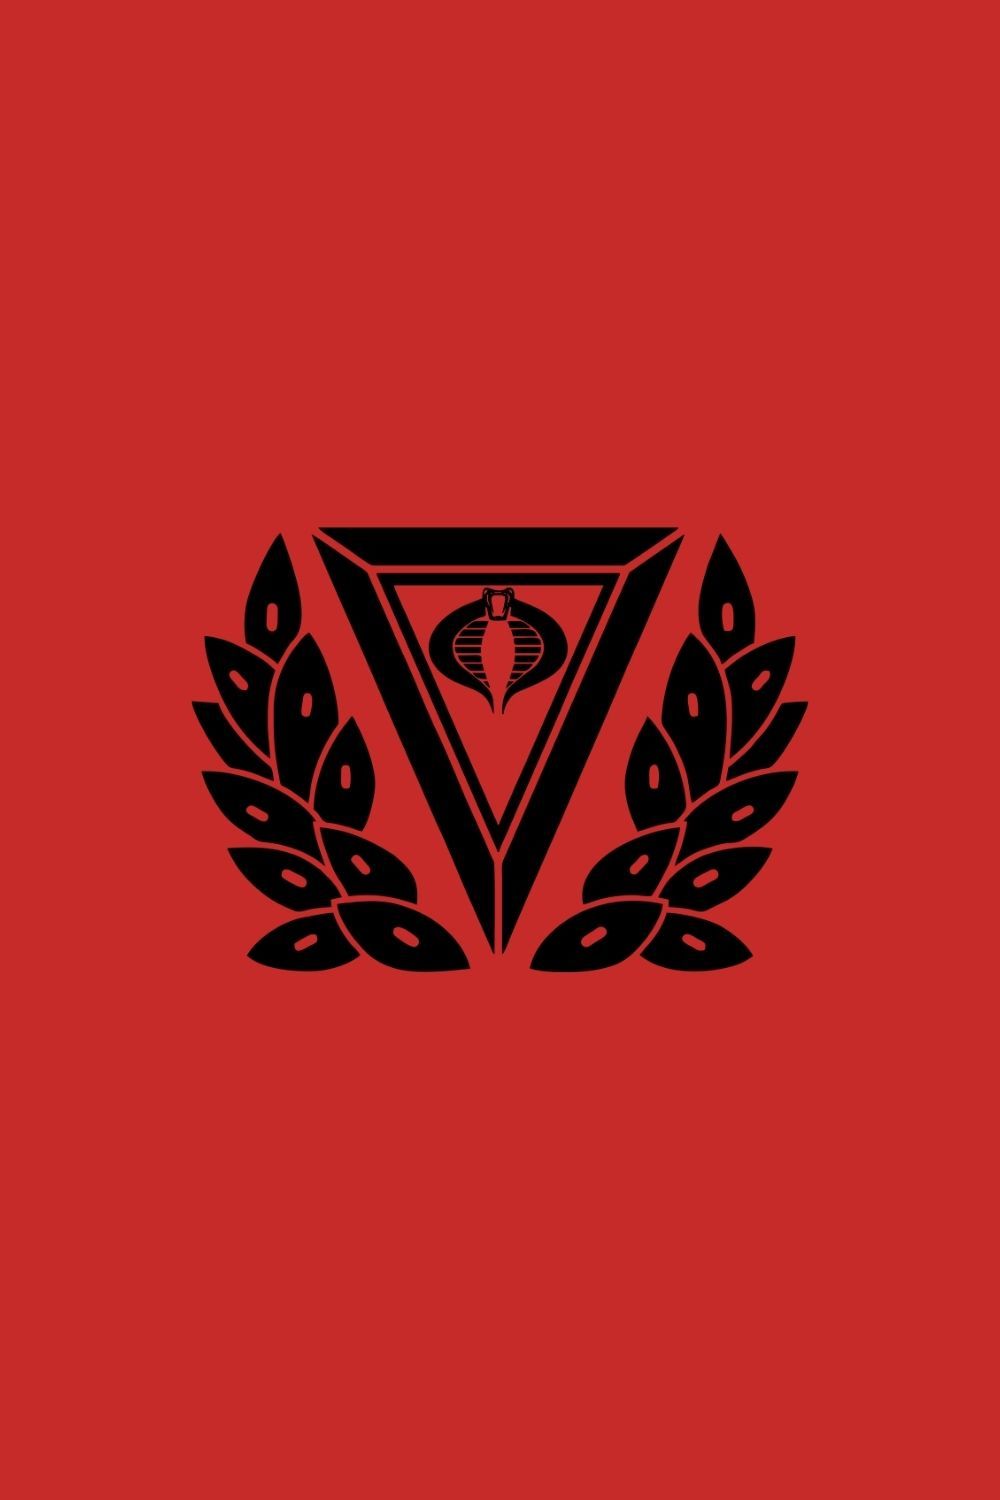 Gi Joe Cobra Crimson Guard Logo Wallpaper Gi joe Gi joe cobra